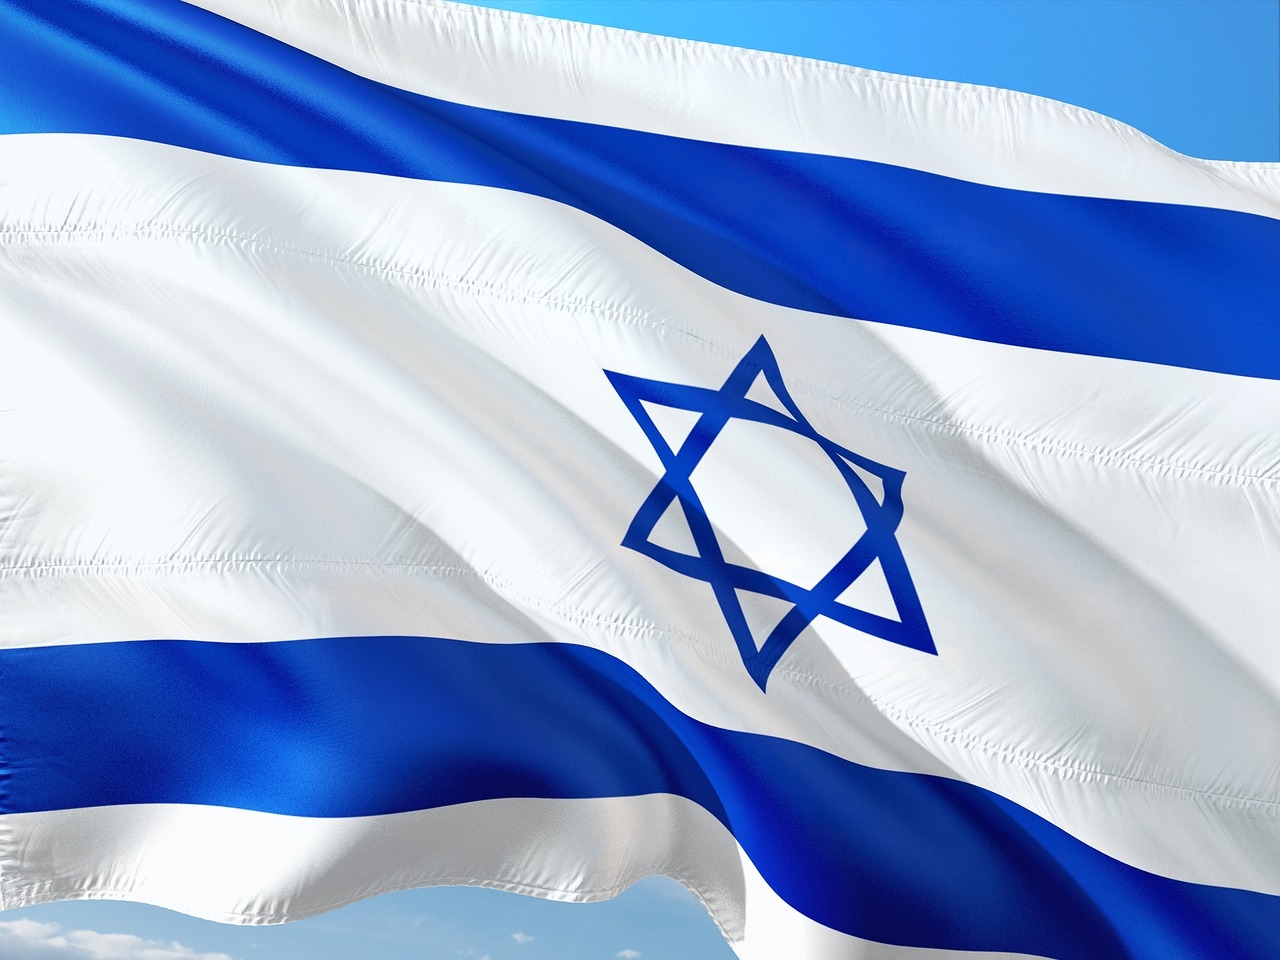 Flagge Israel - von jorono auf Pixabay (c) jorono / Pixabay